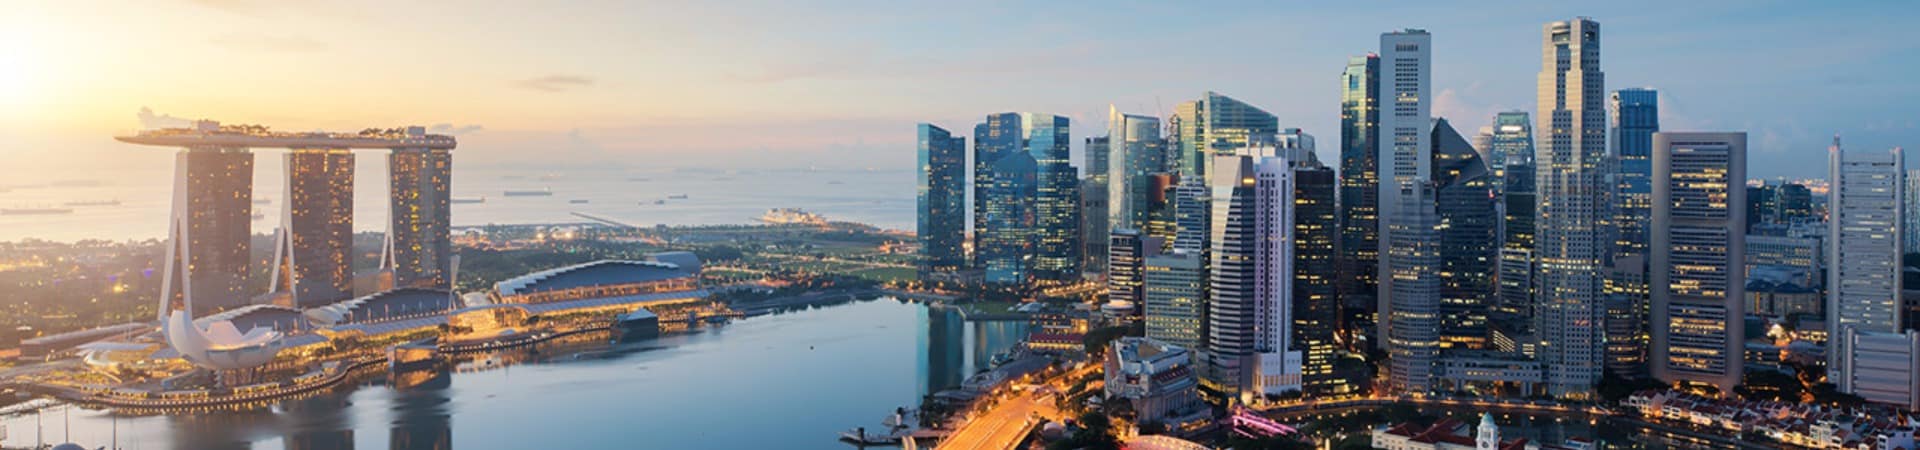 Singapura vista aerea